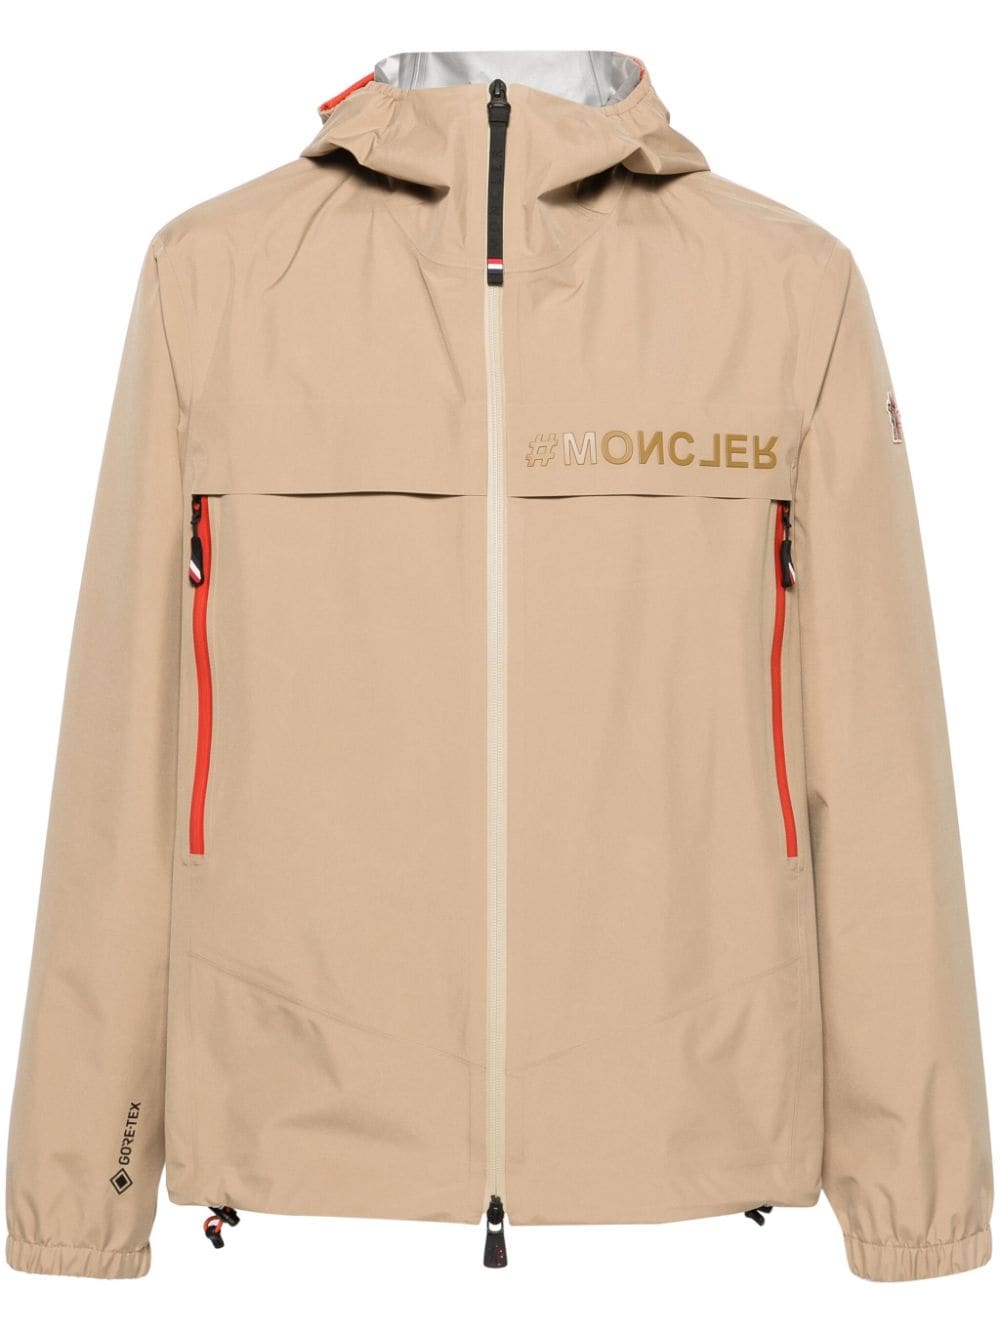 Image 1 of Moncler Grenoble Shipton hooded jacket